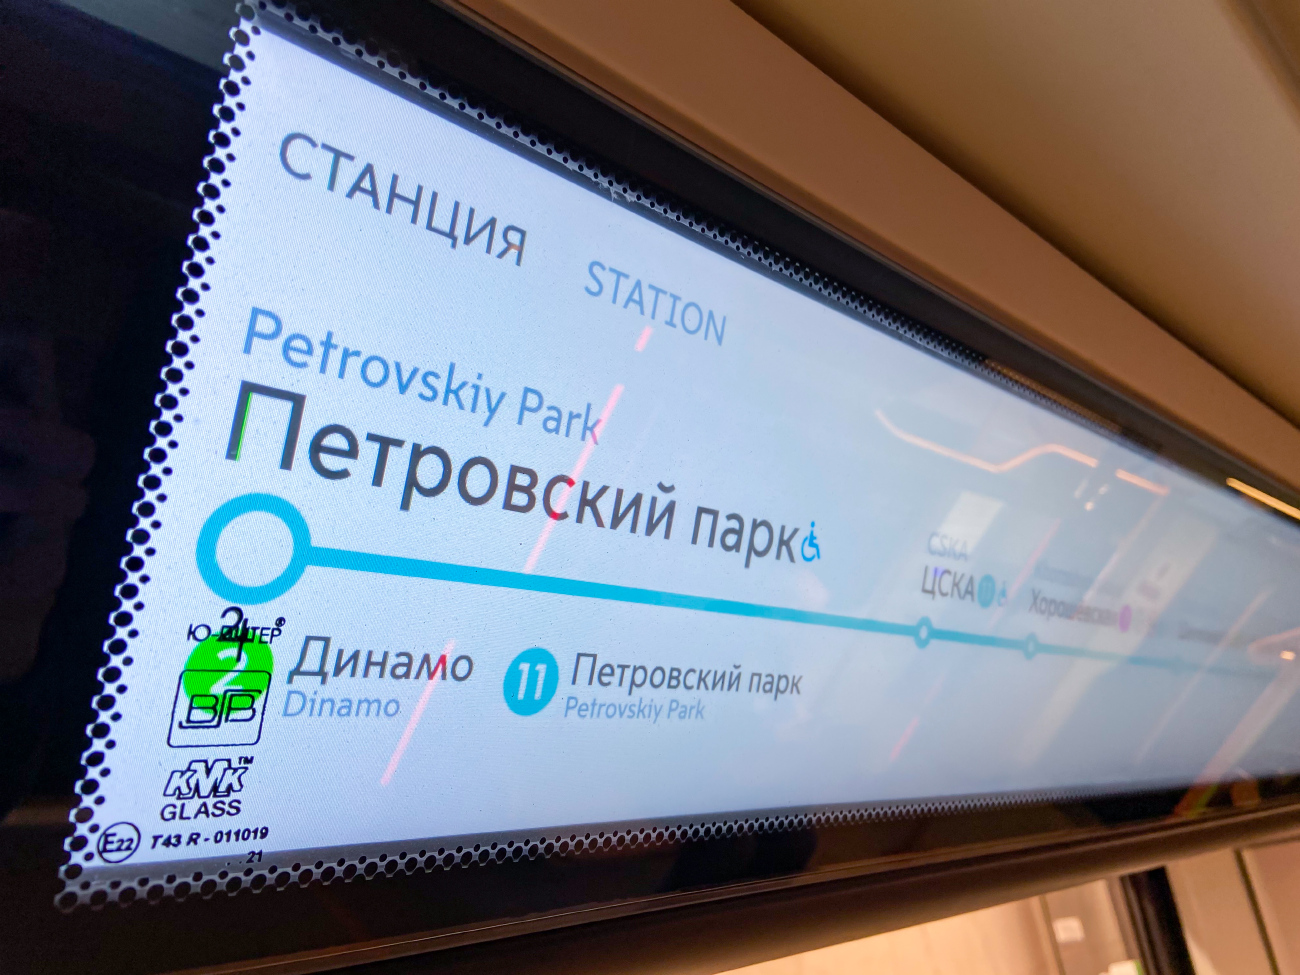 Moscova — Metro — Maps of Individual Lines; Moscova — Metropolitain — [11] Bol'shaya Koltsevaya Line